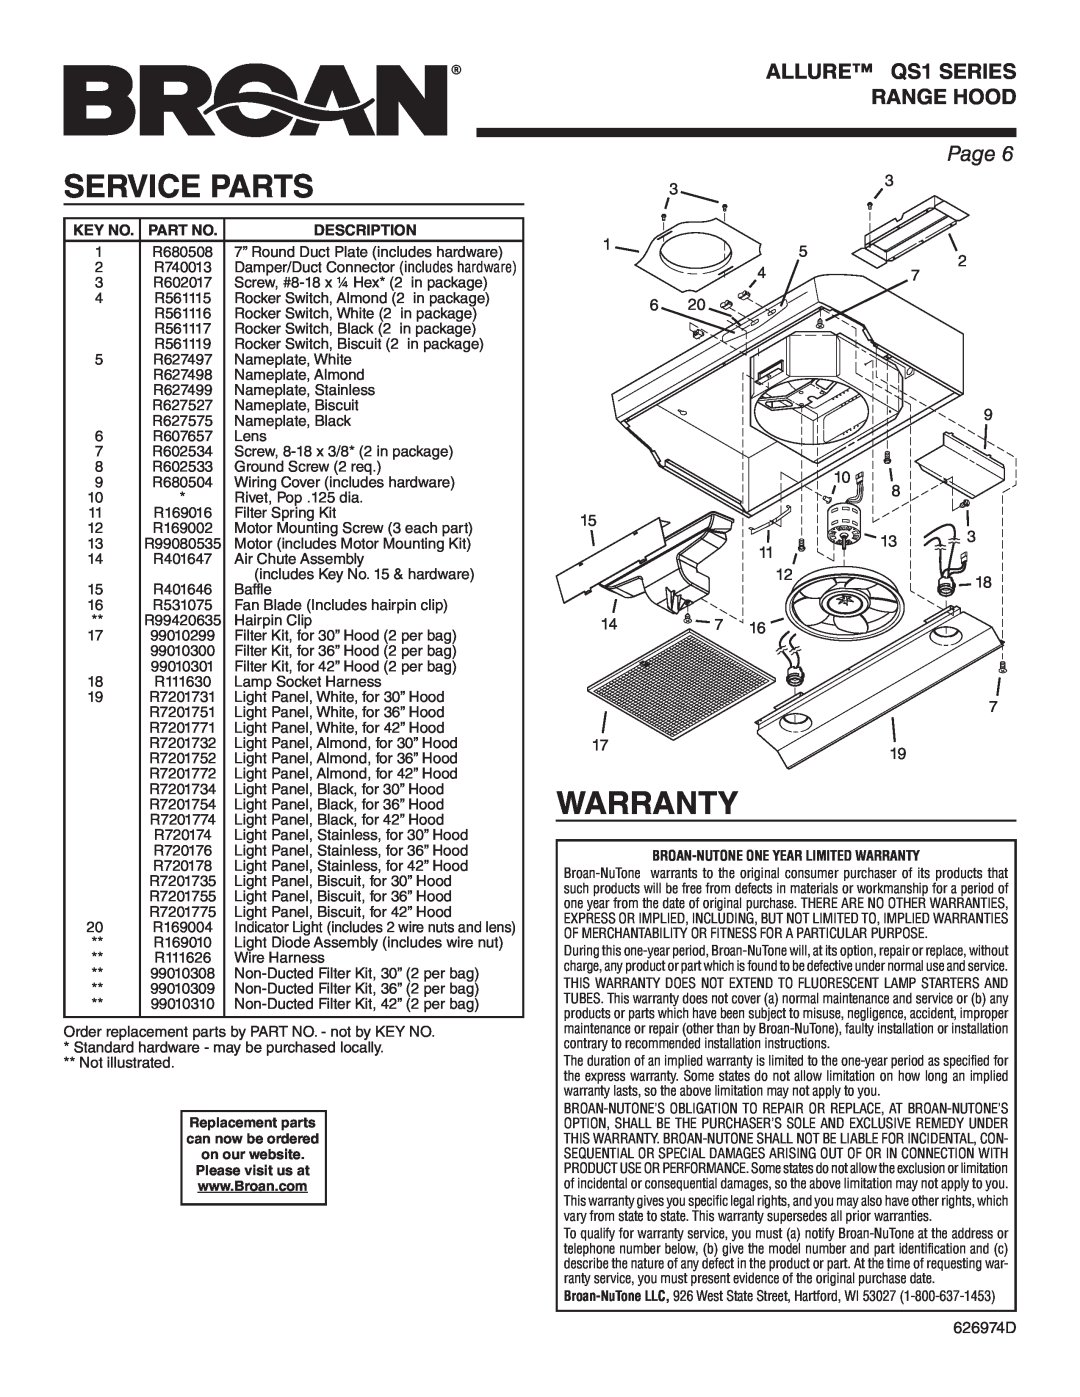 Broan QS130SS manual Service Parts, Warranty, ALLURE QS1 SERIES RANGE HOOD, Page, Key No. Part No, Description 